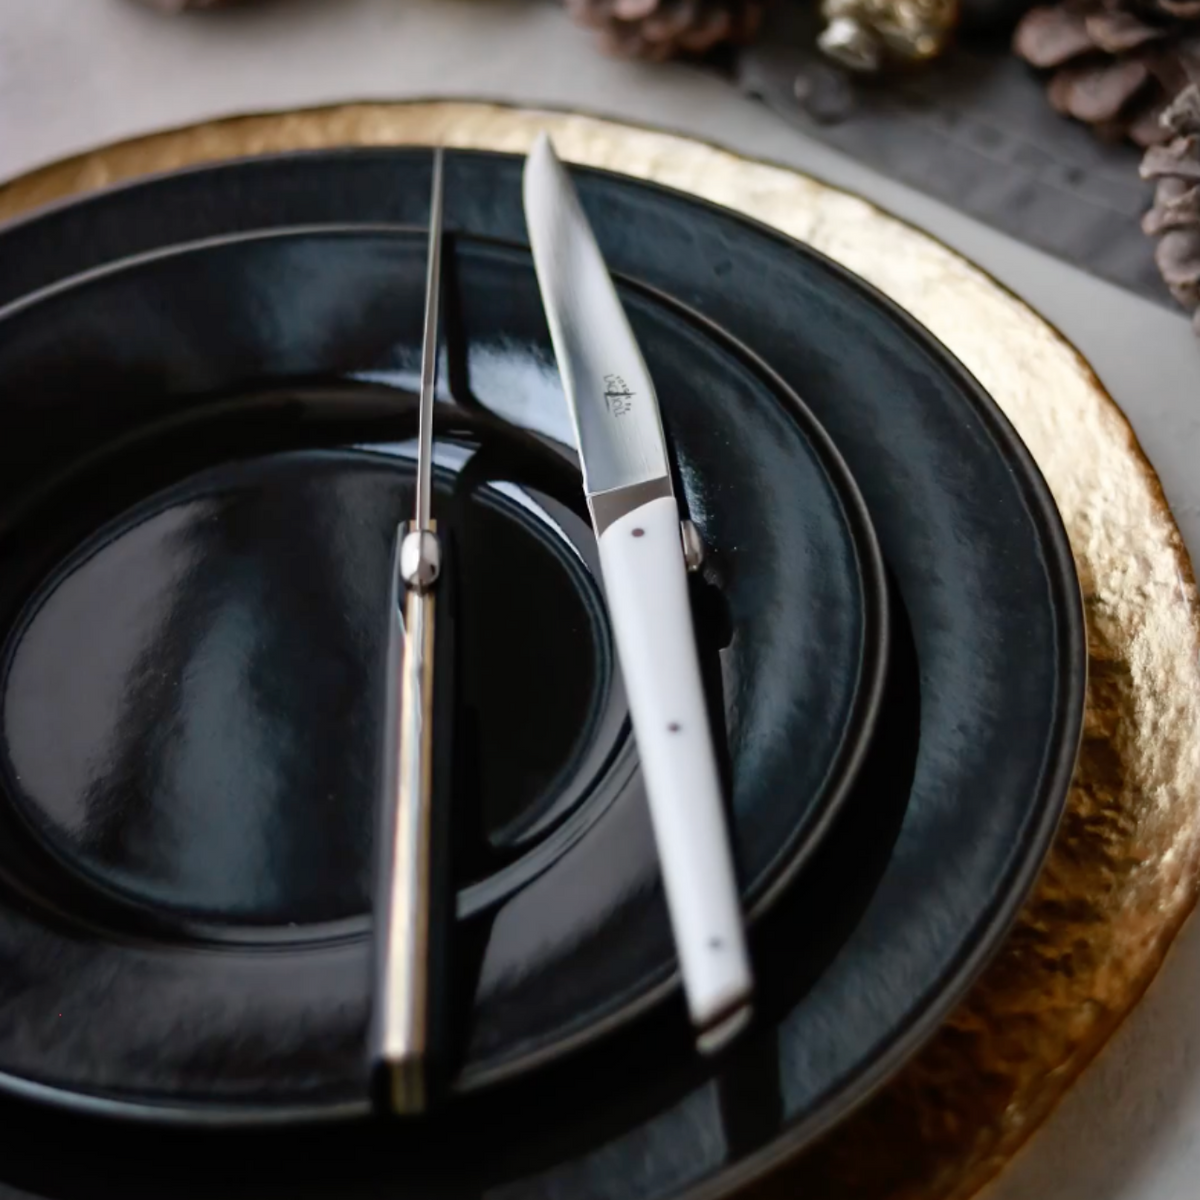 Olivier Gagnère Set of 2 Black Acrylic Steak Knives